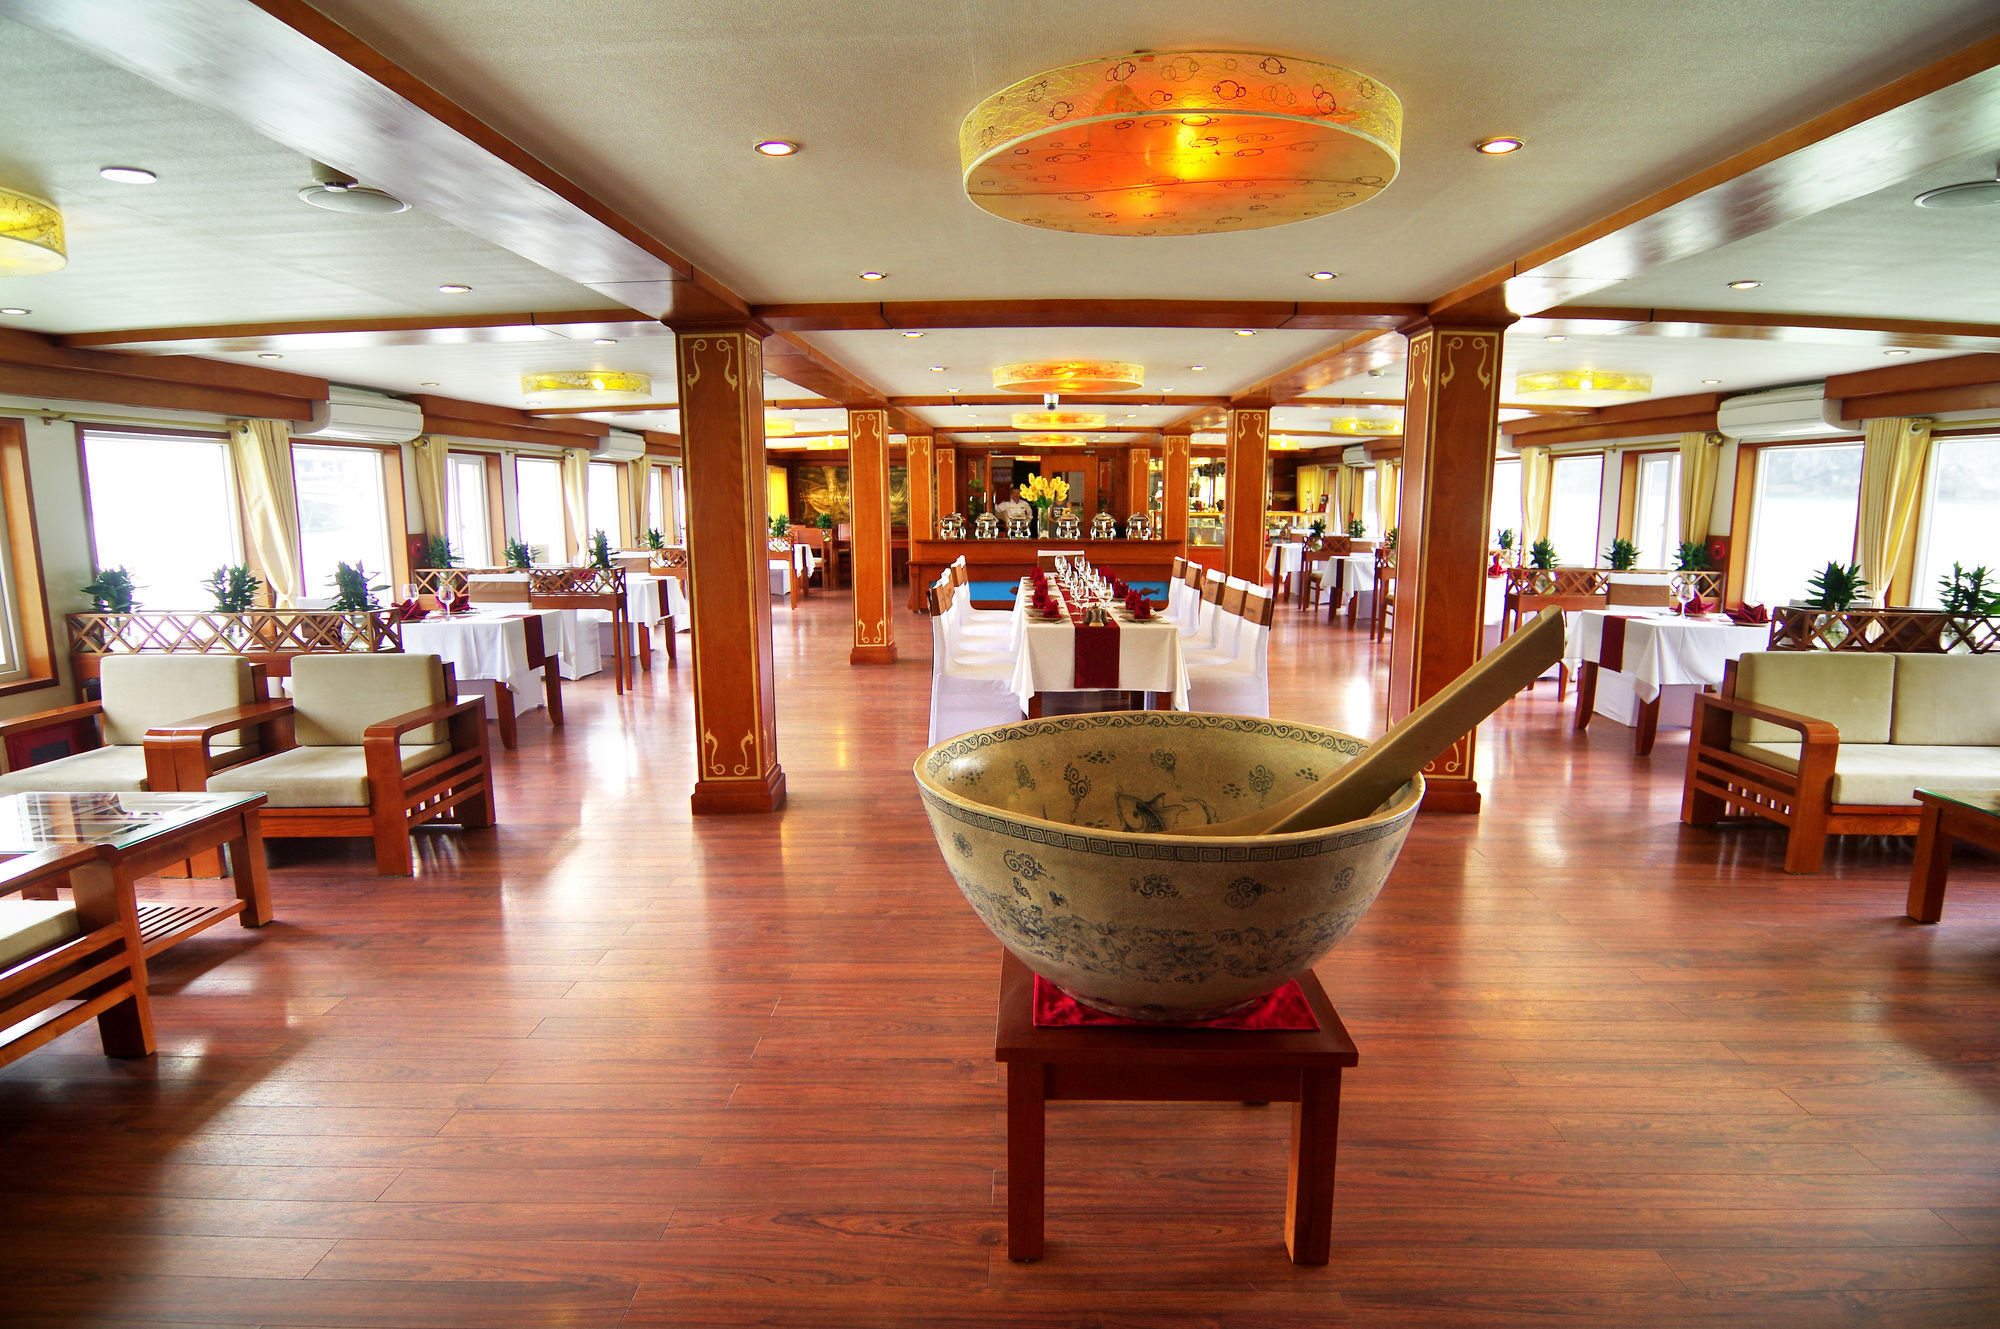 Huong Hai Sealife Cruise Hạ Long Exterior foto